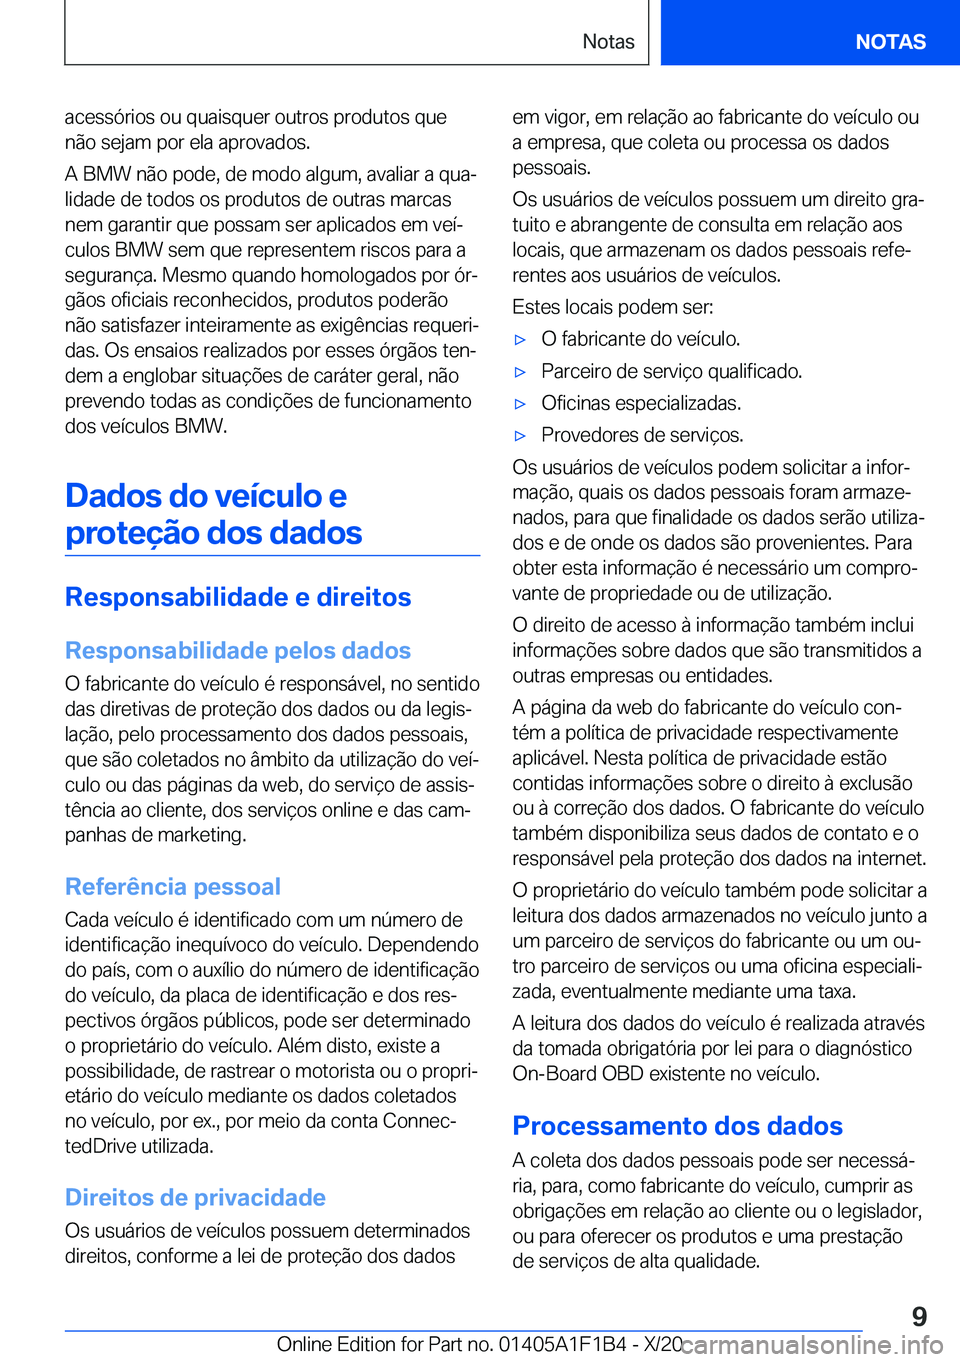 BMW M5 2021  Manual do condutor (in Portuguese) �a�c�e�s�s�ó�r�i�o�s��o�u��q�u�a�i�s�q�u�e�r��o�u�t�r�o�s��p�r�o�d�u�t�o�s��q�u�e
�n�ã�o��s�e�j�a�m��p�o�r��e�l�a��a�p�r�o�v�a�d�o�s�.
�A��B�M�W��n�ã�o��p�o�d�e�,��d�e��m�o�d�o��a�l�